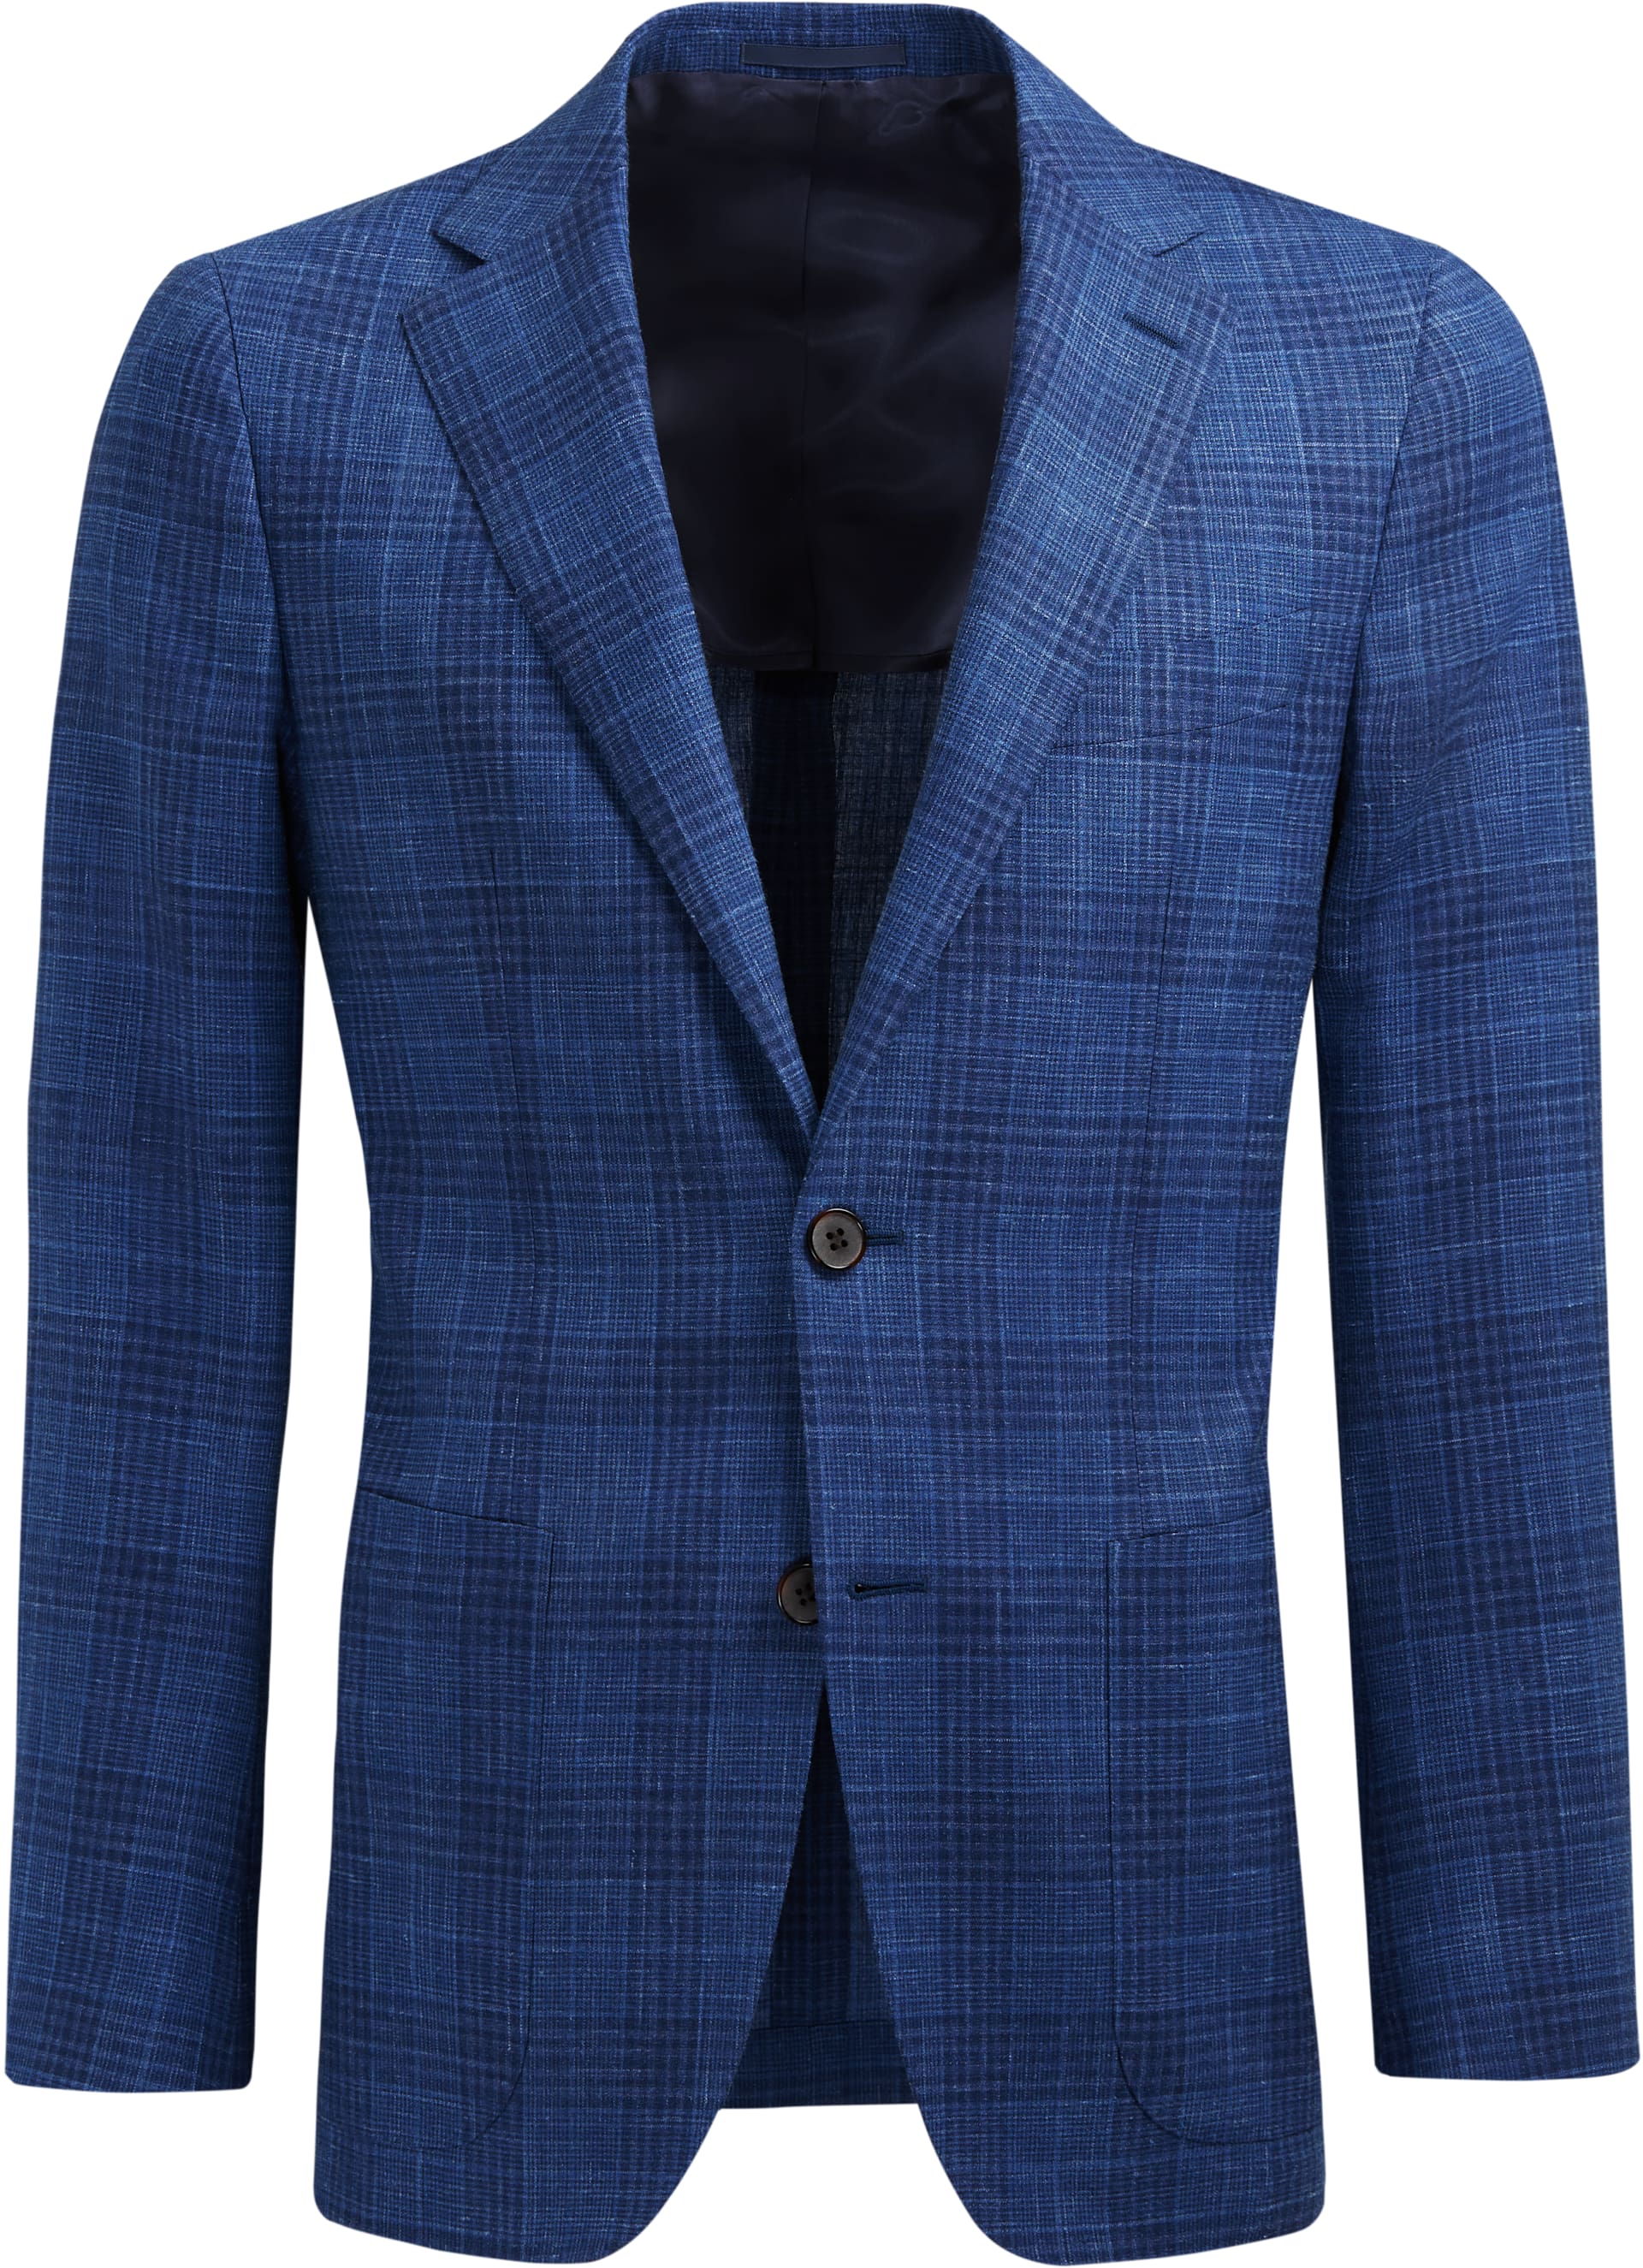 Jacket Blue Check Havana C1227i | Suitsupply Online Store